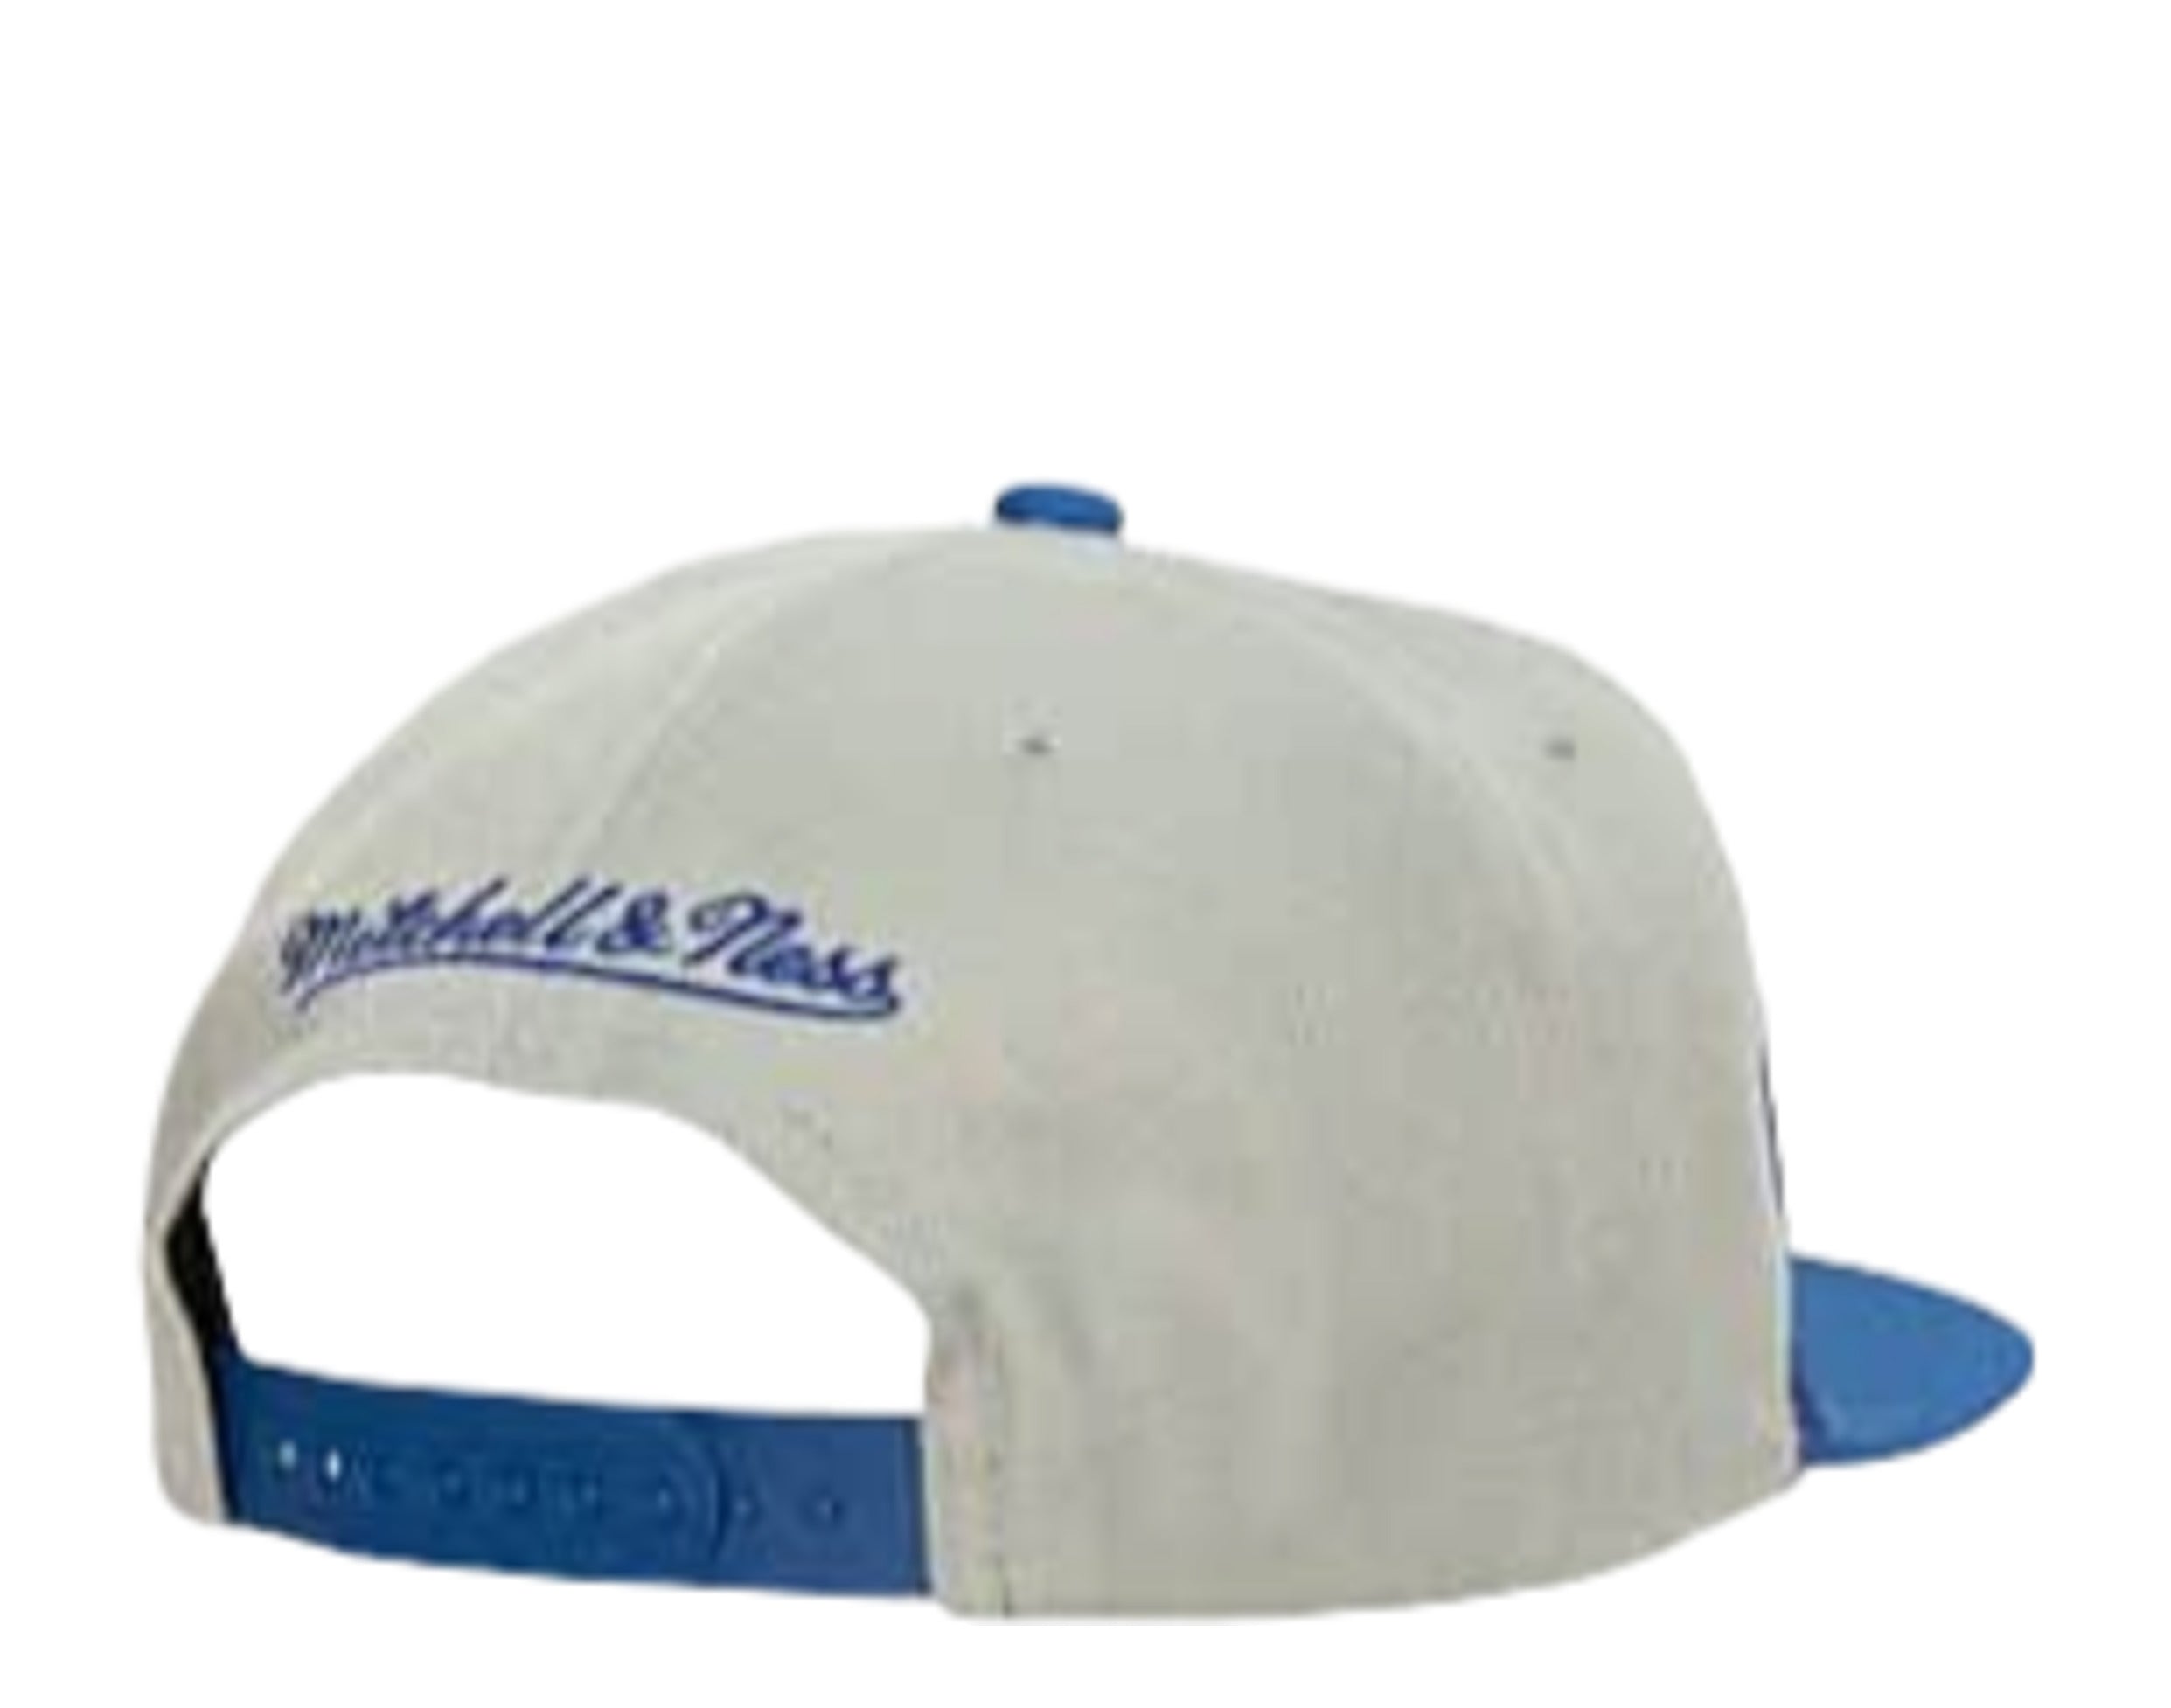 Orlando Magic Men's NBA Mitchell & Ness Snapback Hat